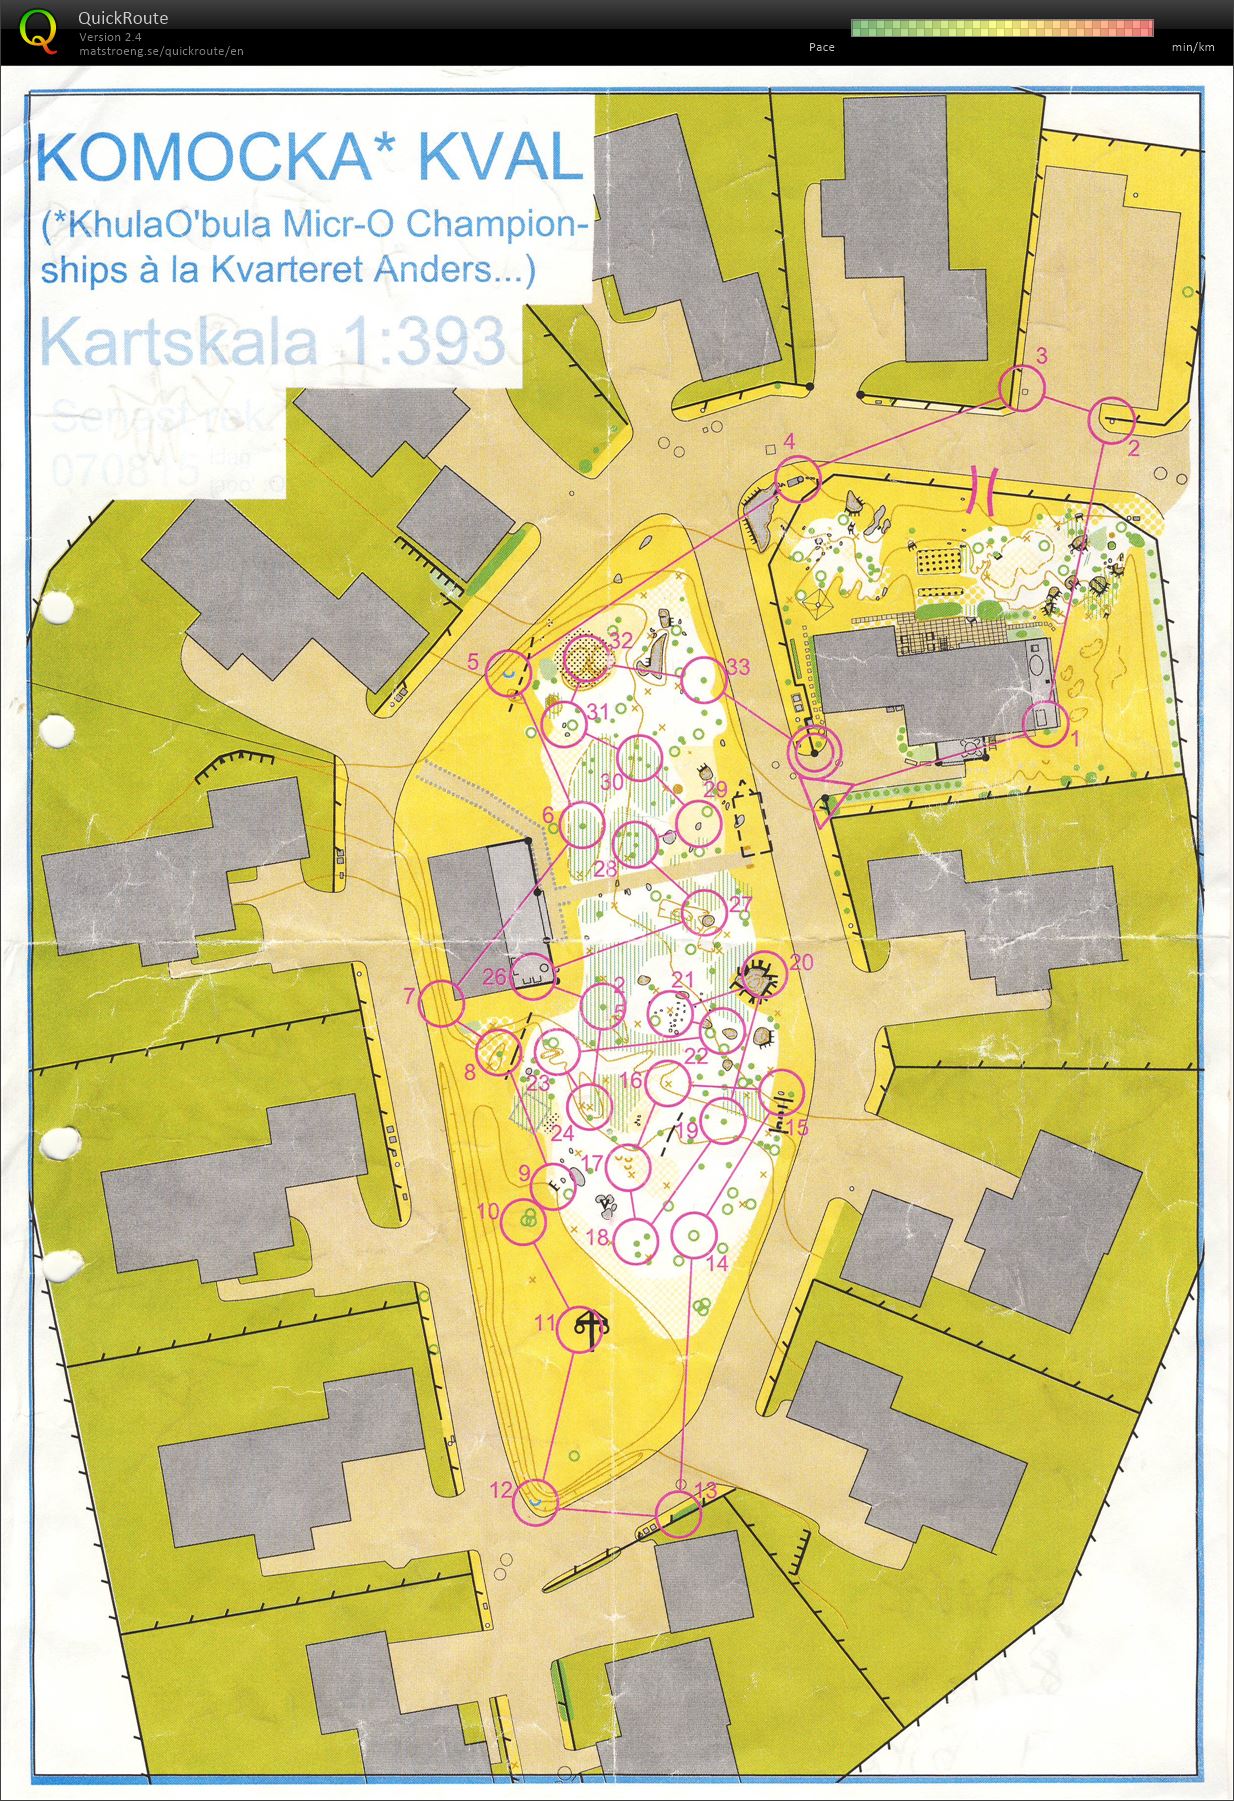 Komocka, kval (2007-08-15)